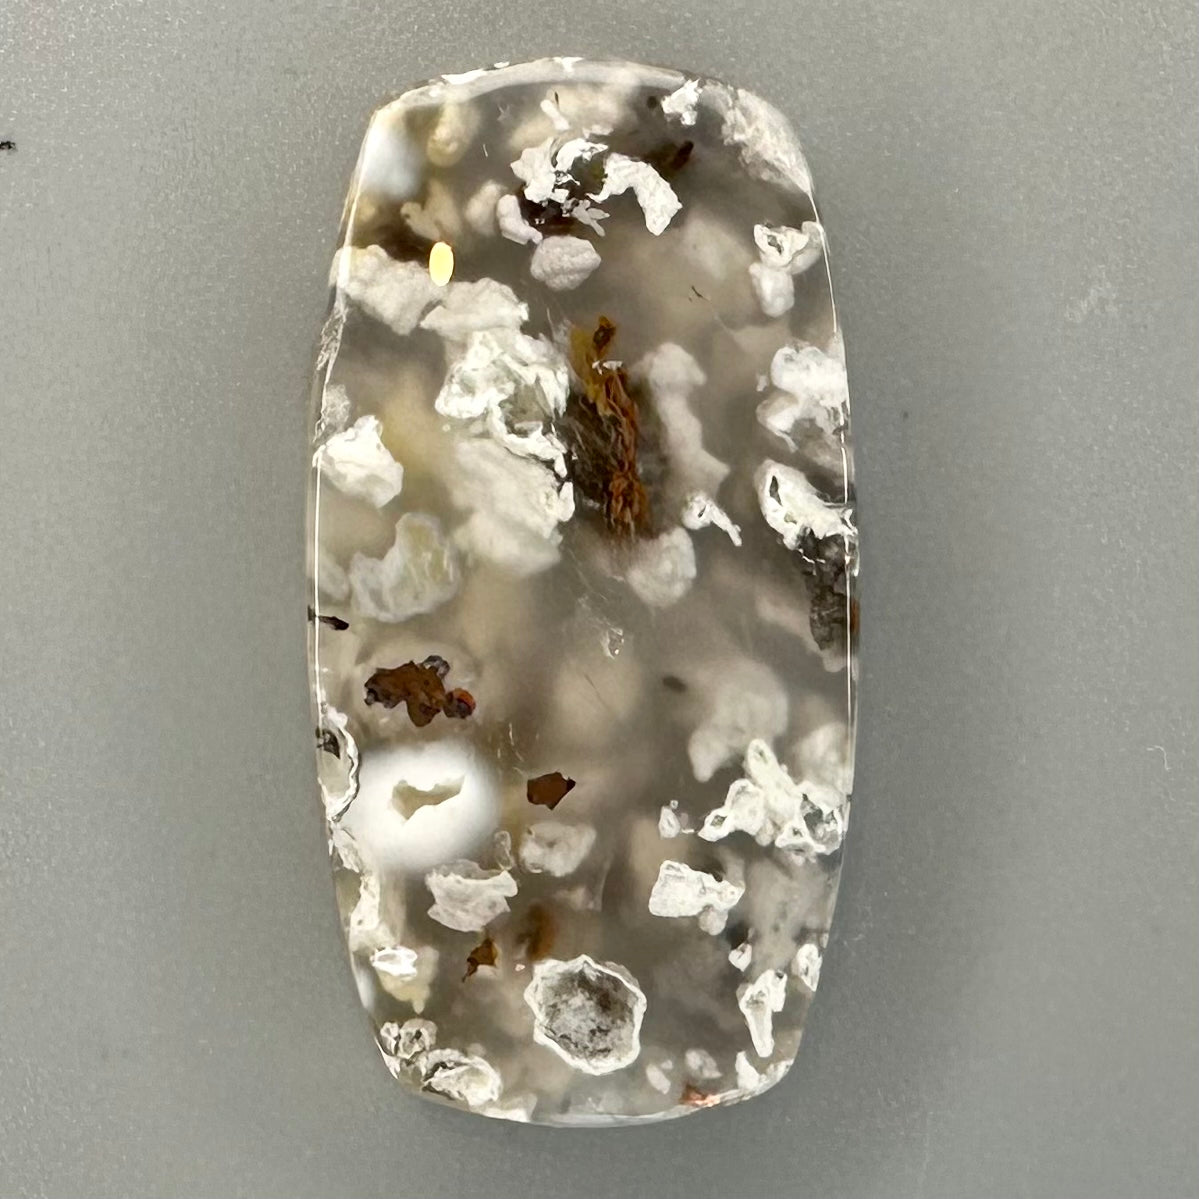 Obi Agate with Gem Silica and Copper inclusions